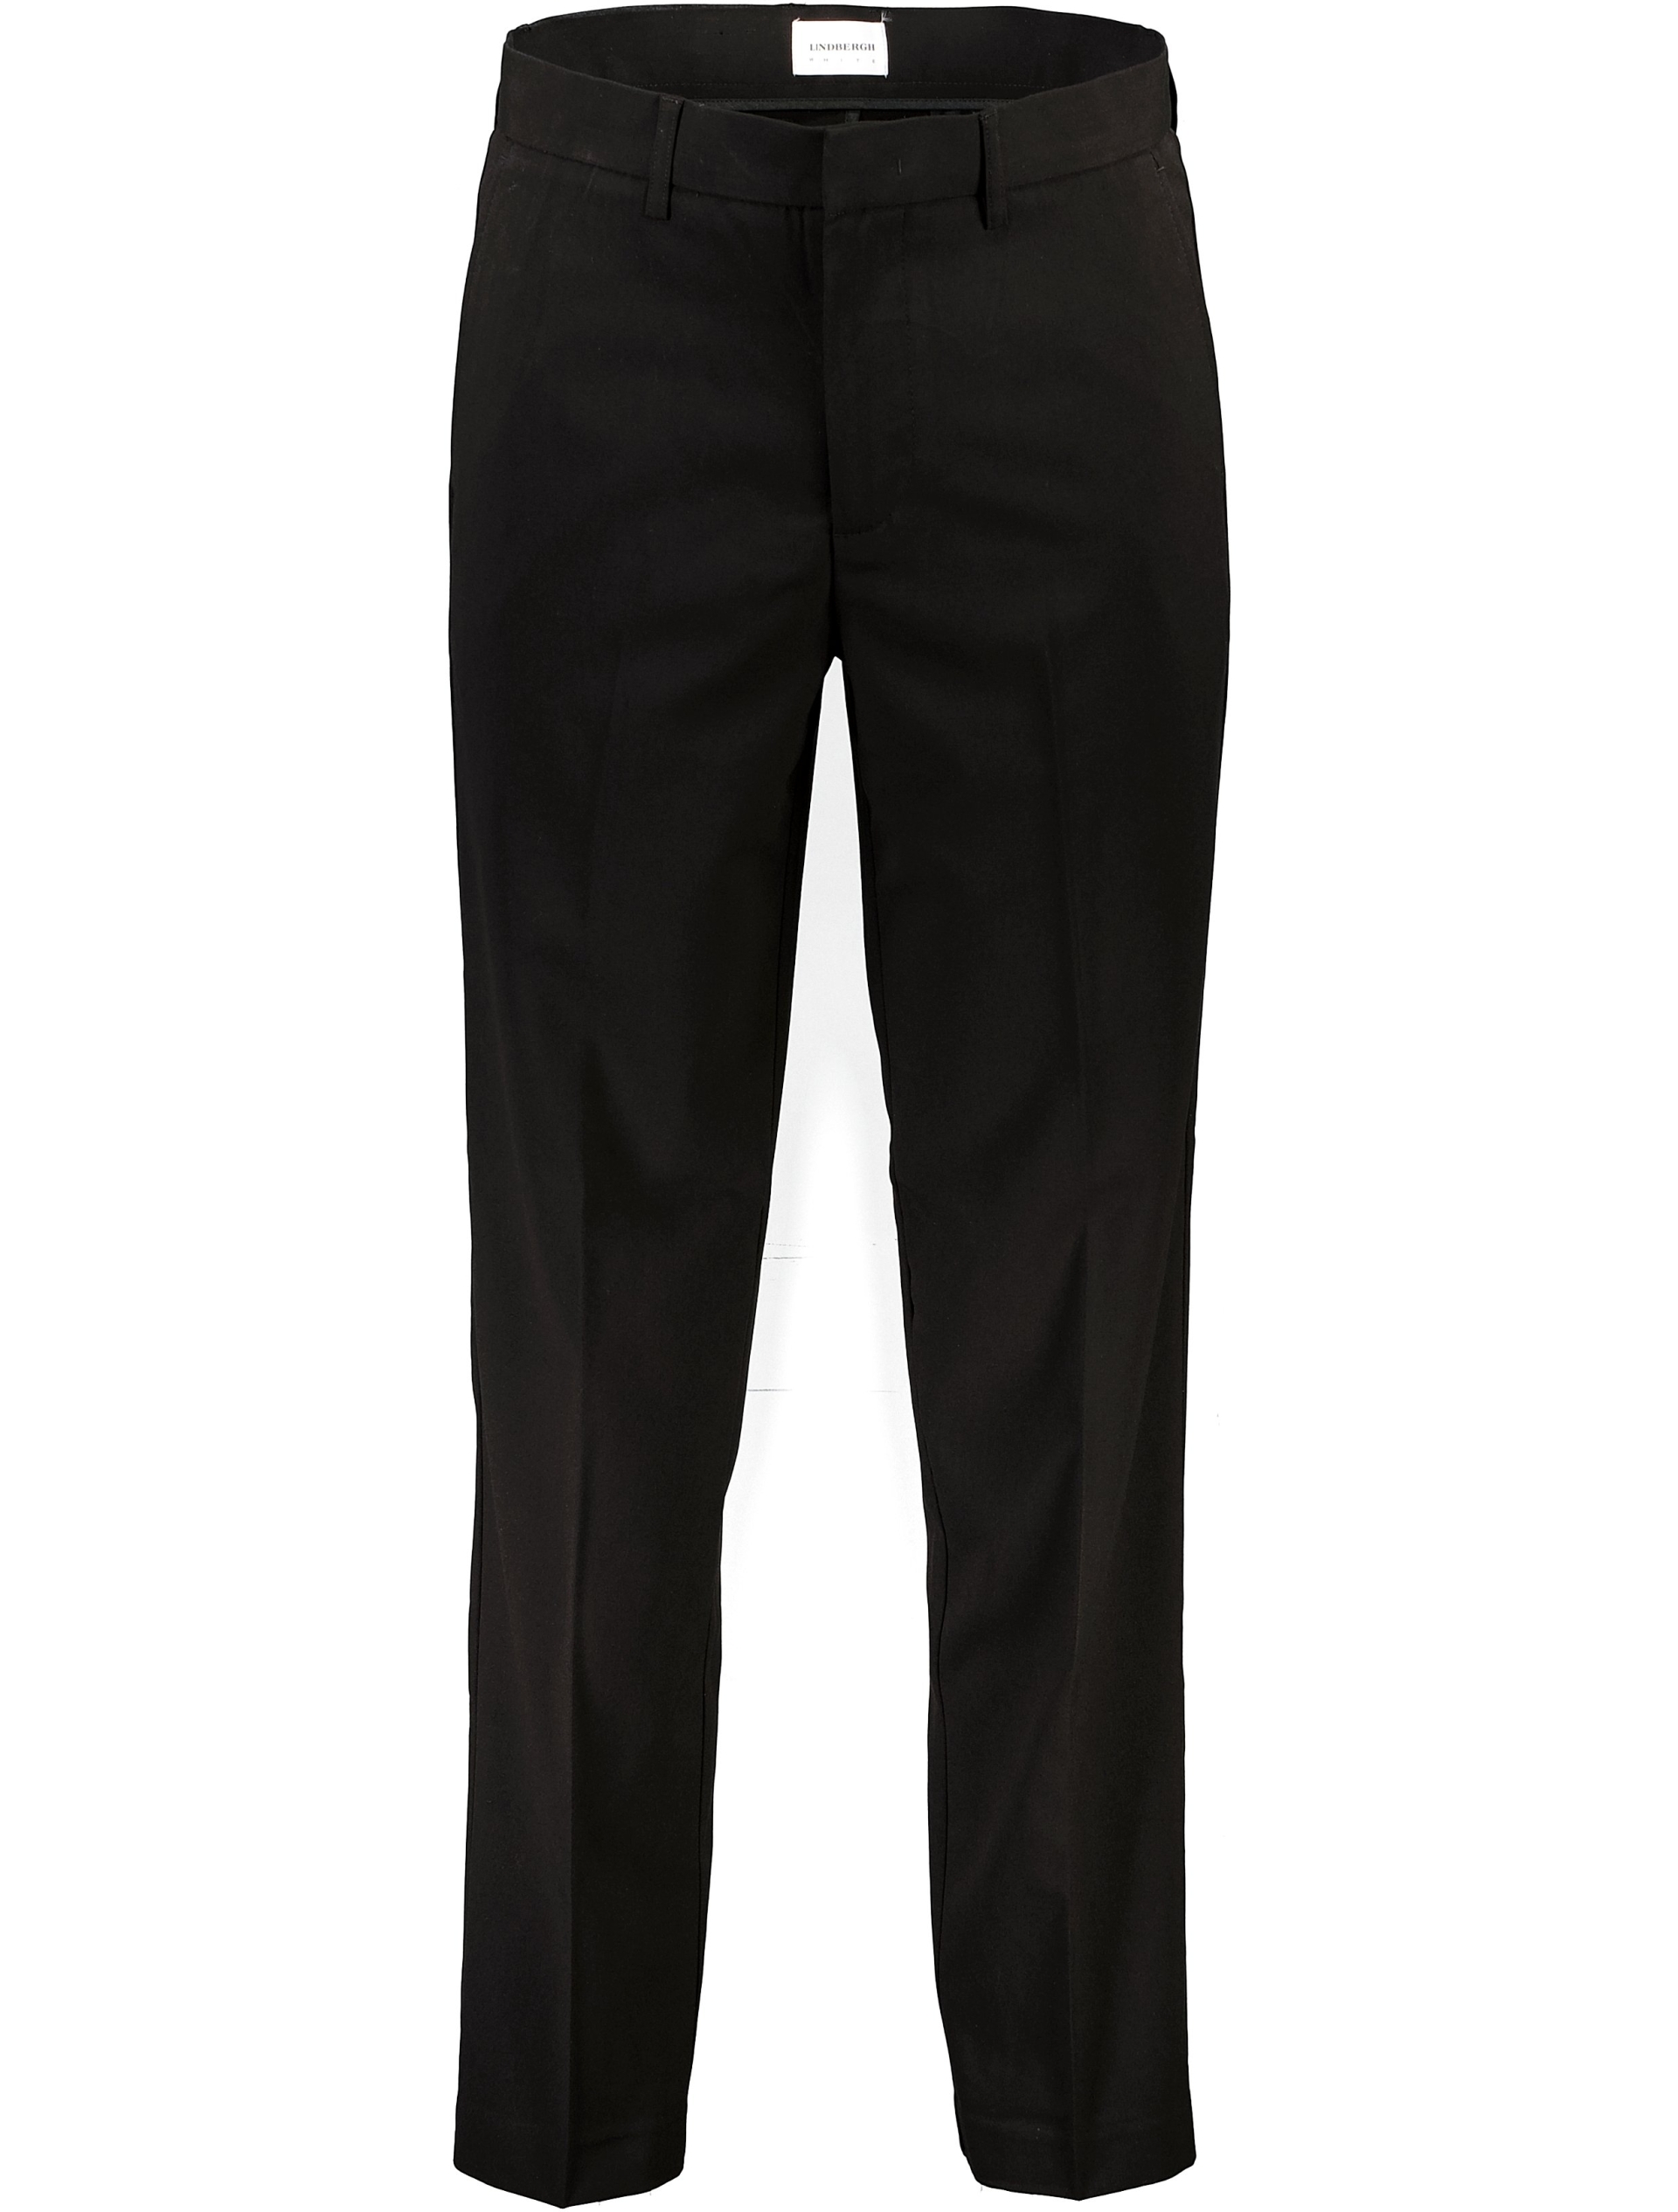 Lindbergh Classic trousers black / black